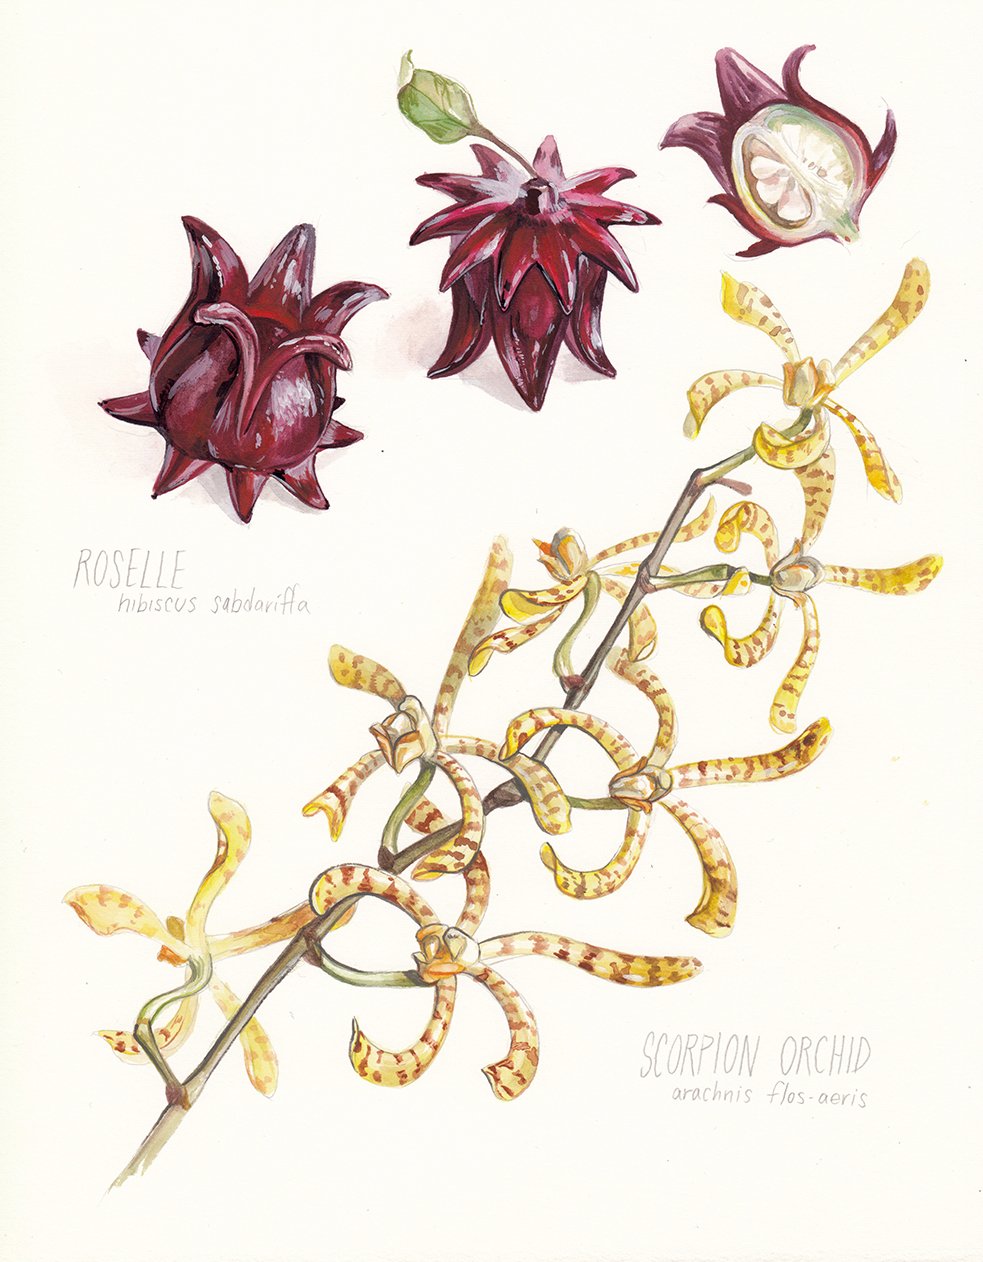 kauai-botanical-illustration-scorpion-orchi-web.jpg